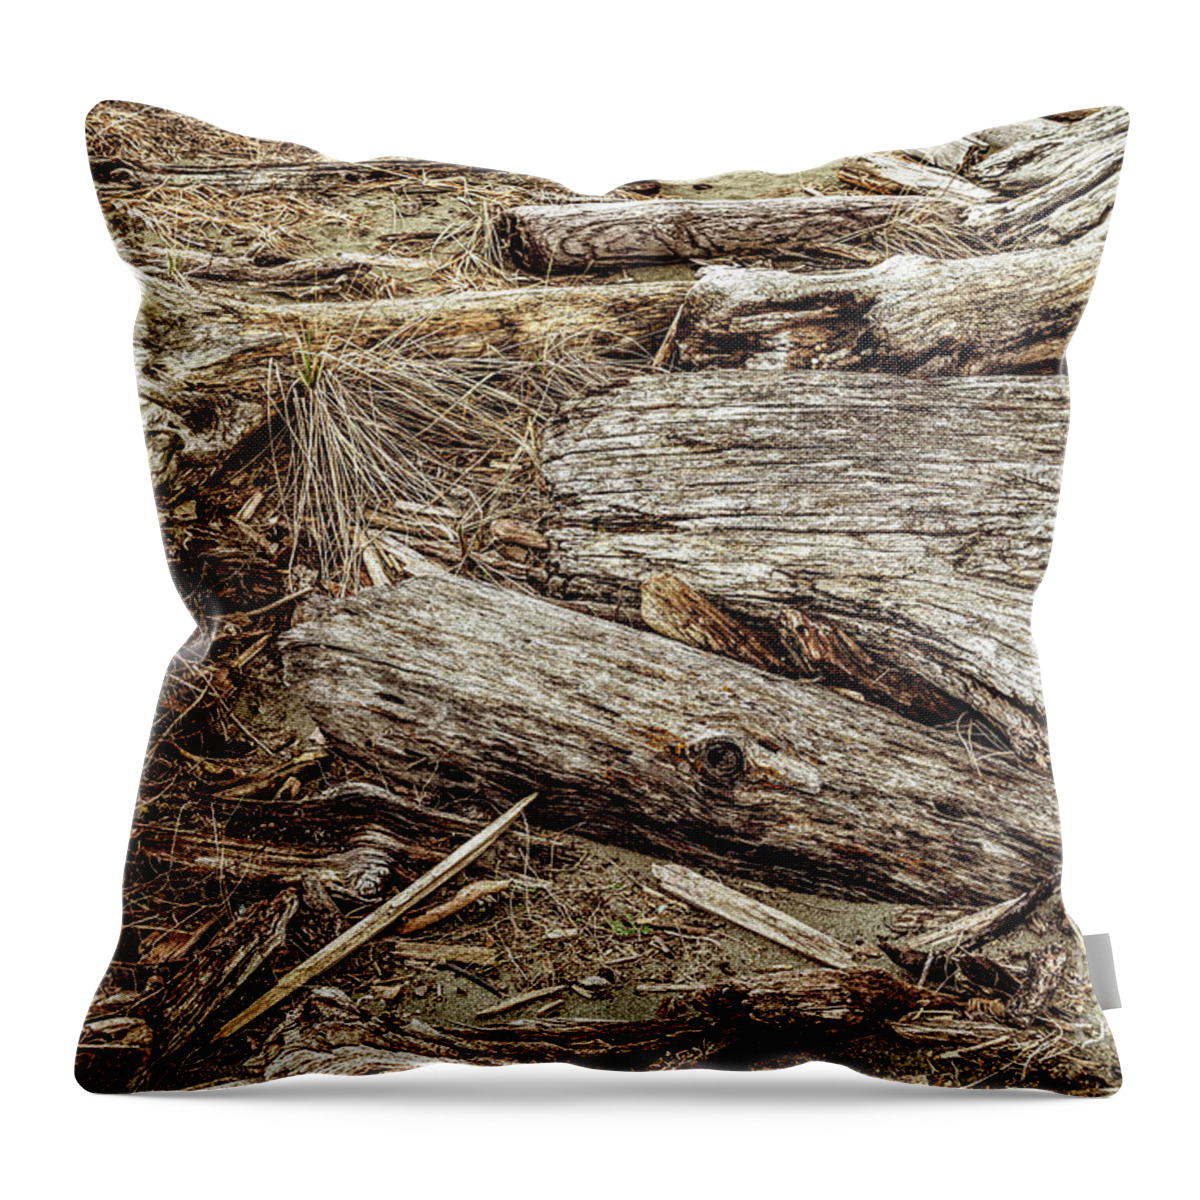 Beach Driftwood Throw Pillow featuring the photograph Beach Driftwood 41 by M G Whittingham